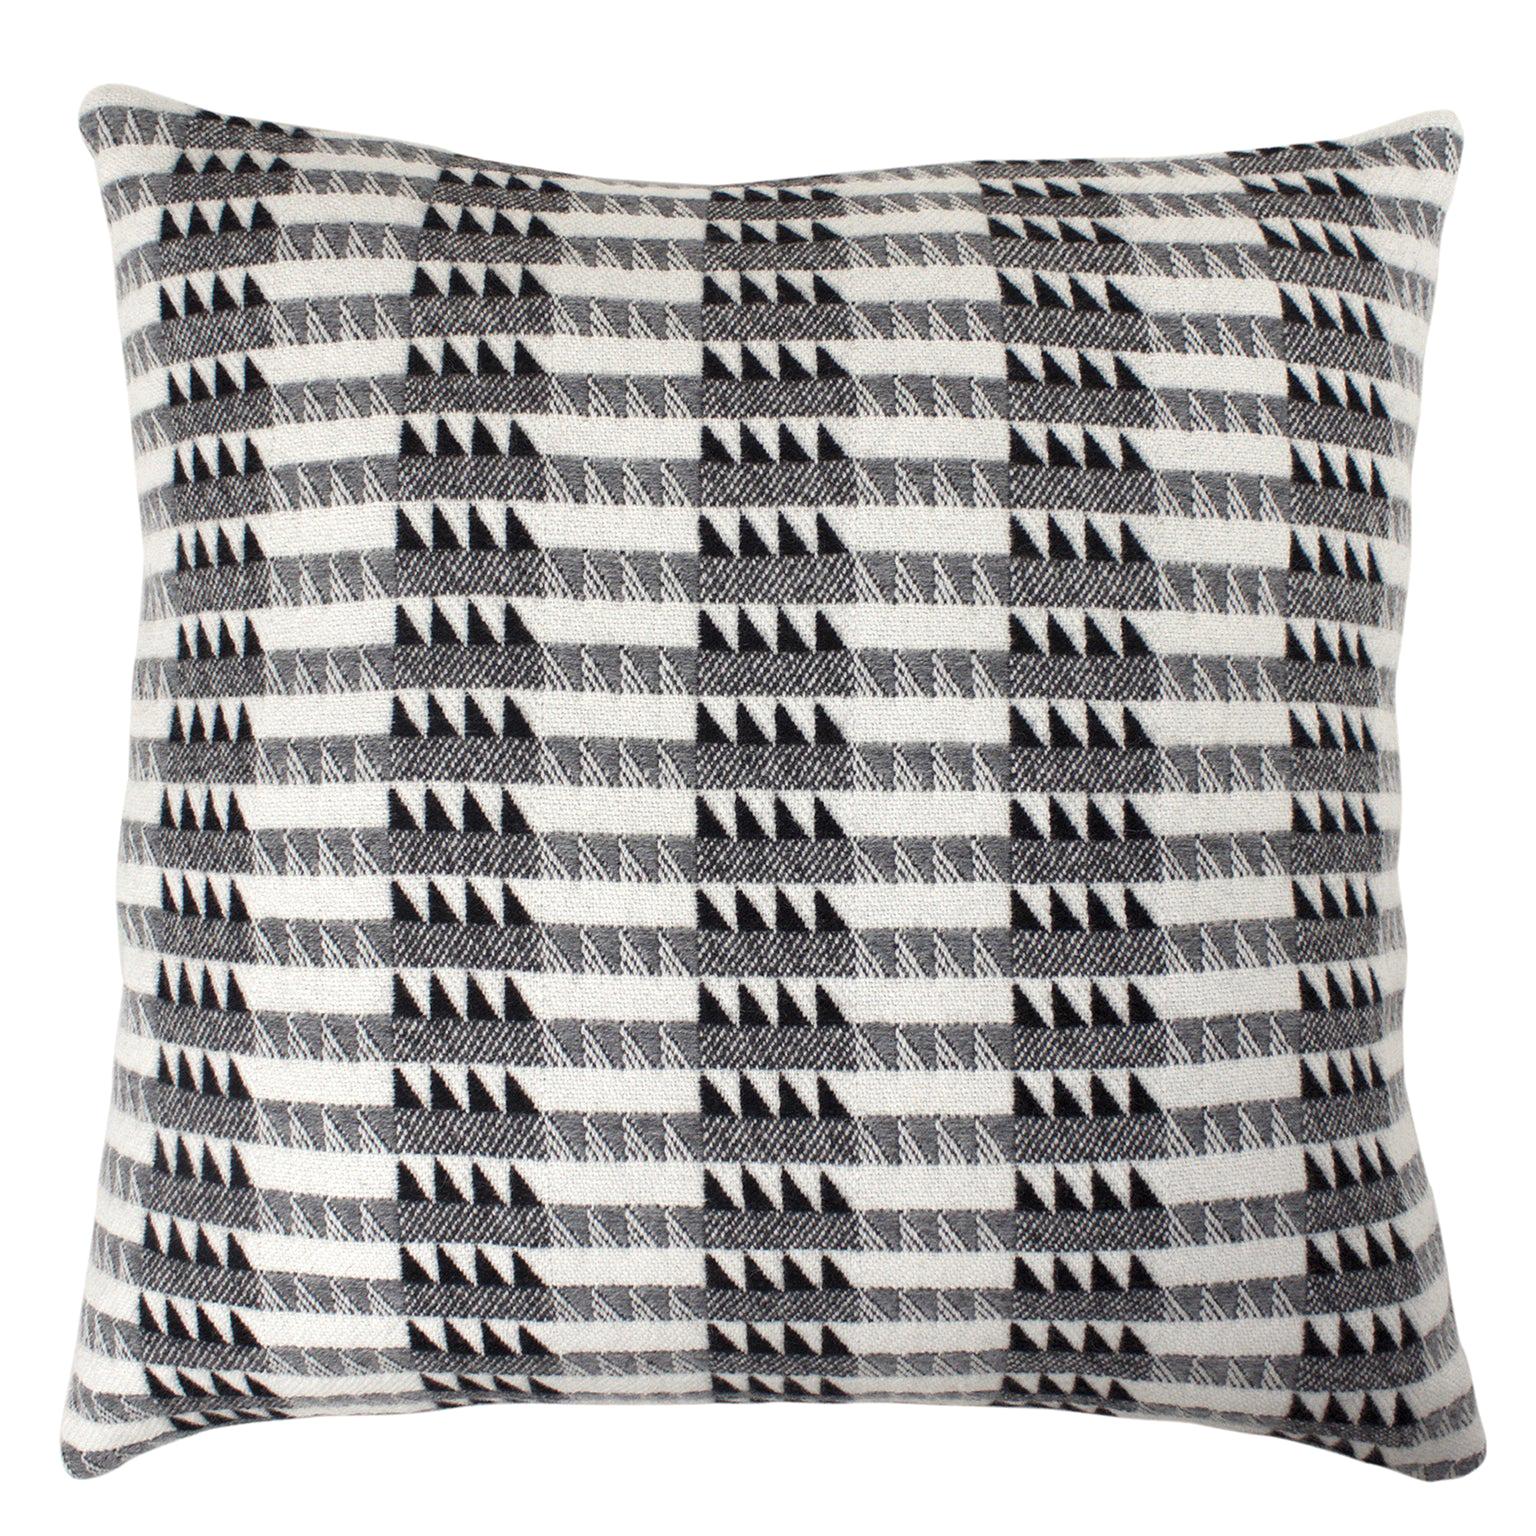 Handwoven 'Ixelles' Geometric Merino Wool Cushion Pillow, Graphite Grey